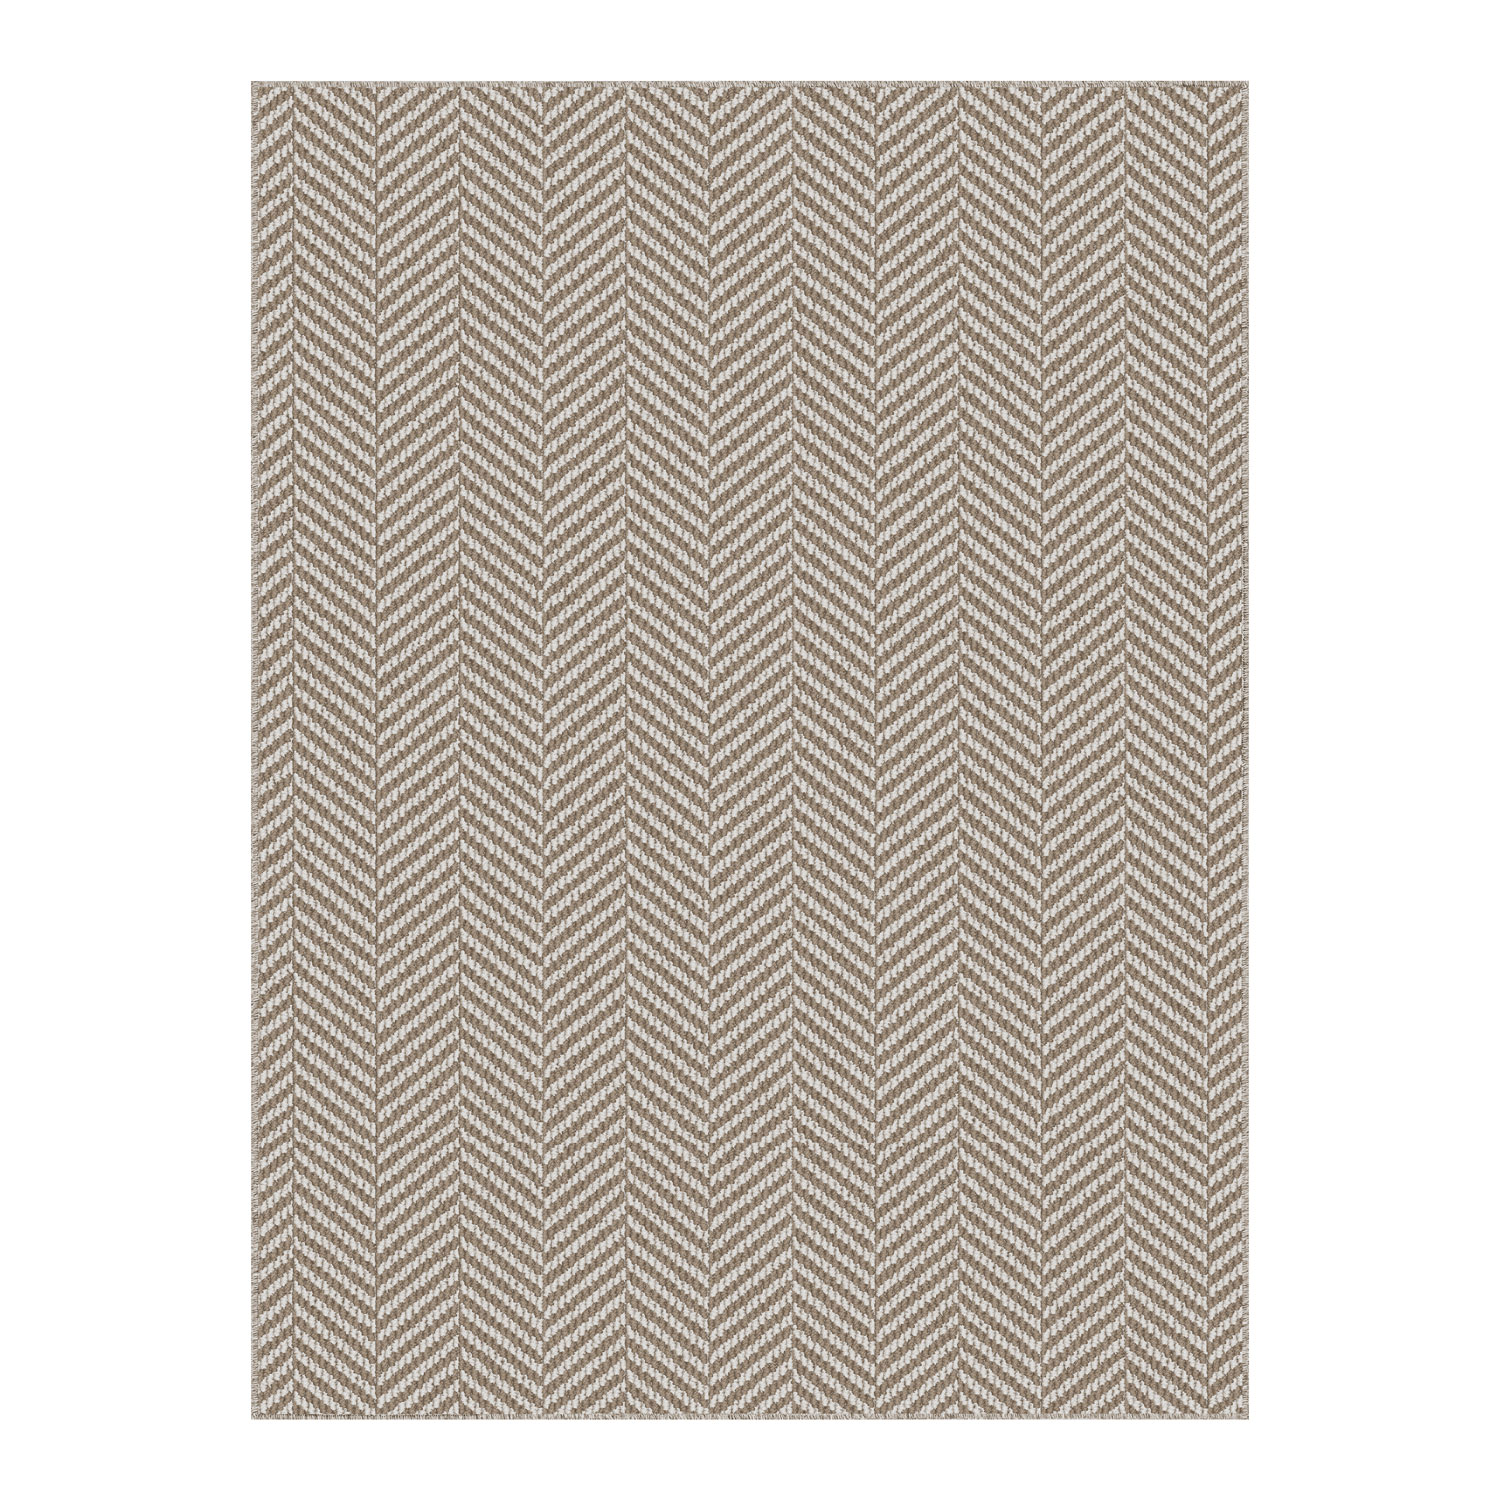 TRIDENT Collection, rug, beige, 3'x4'